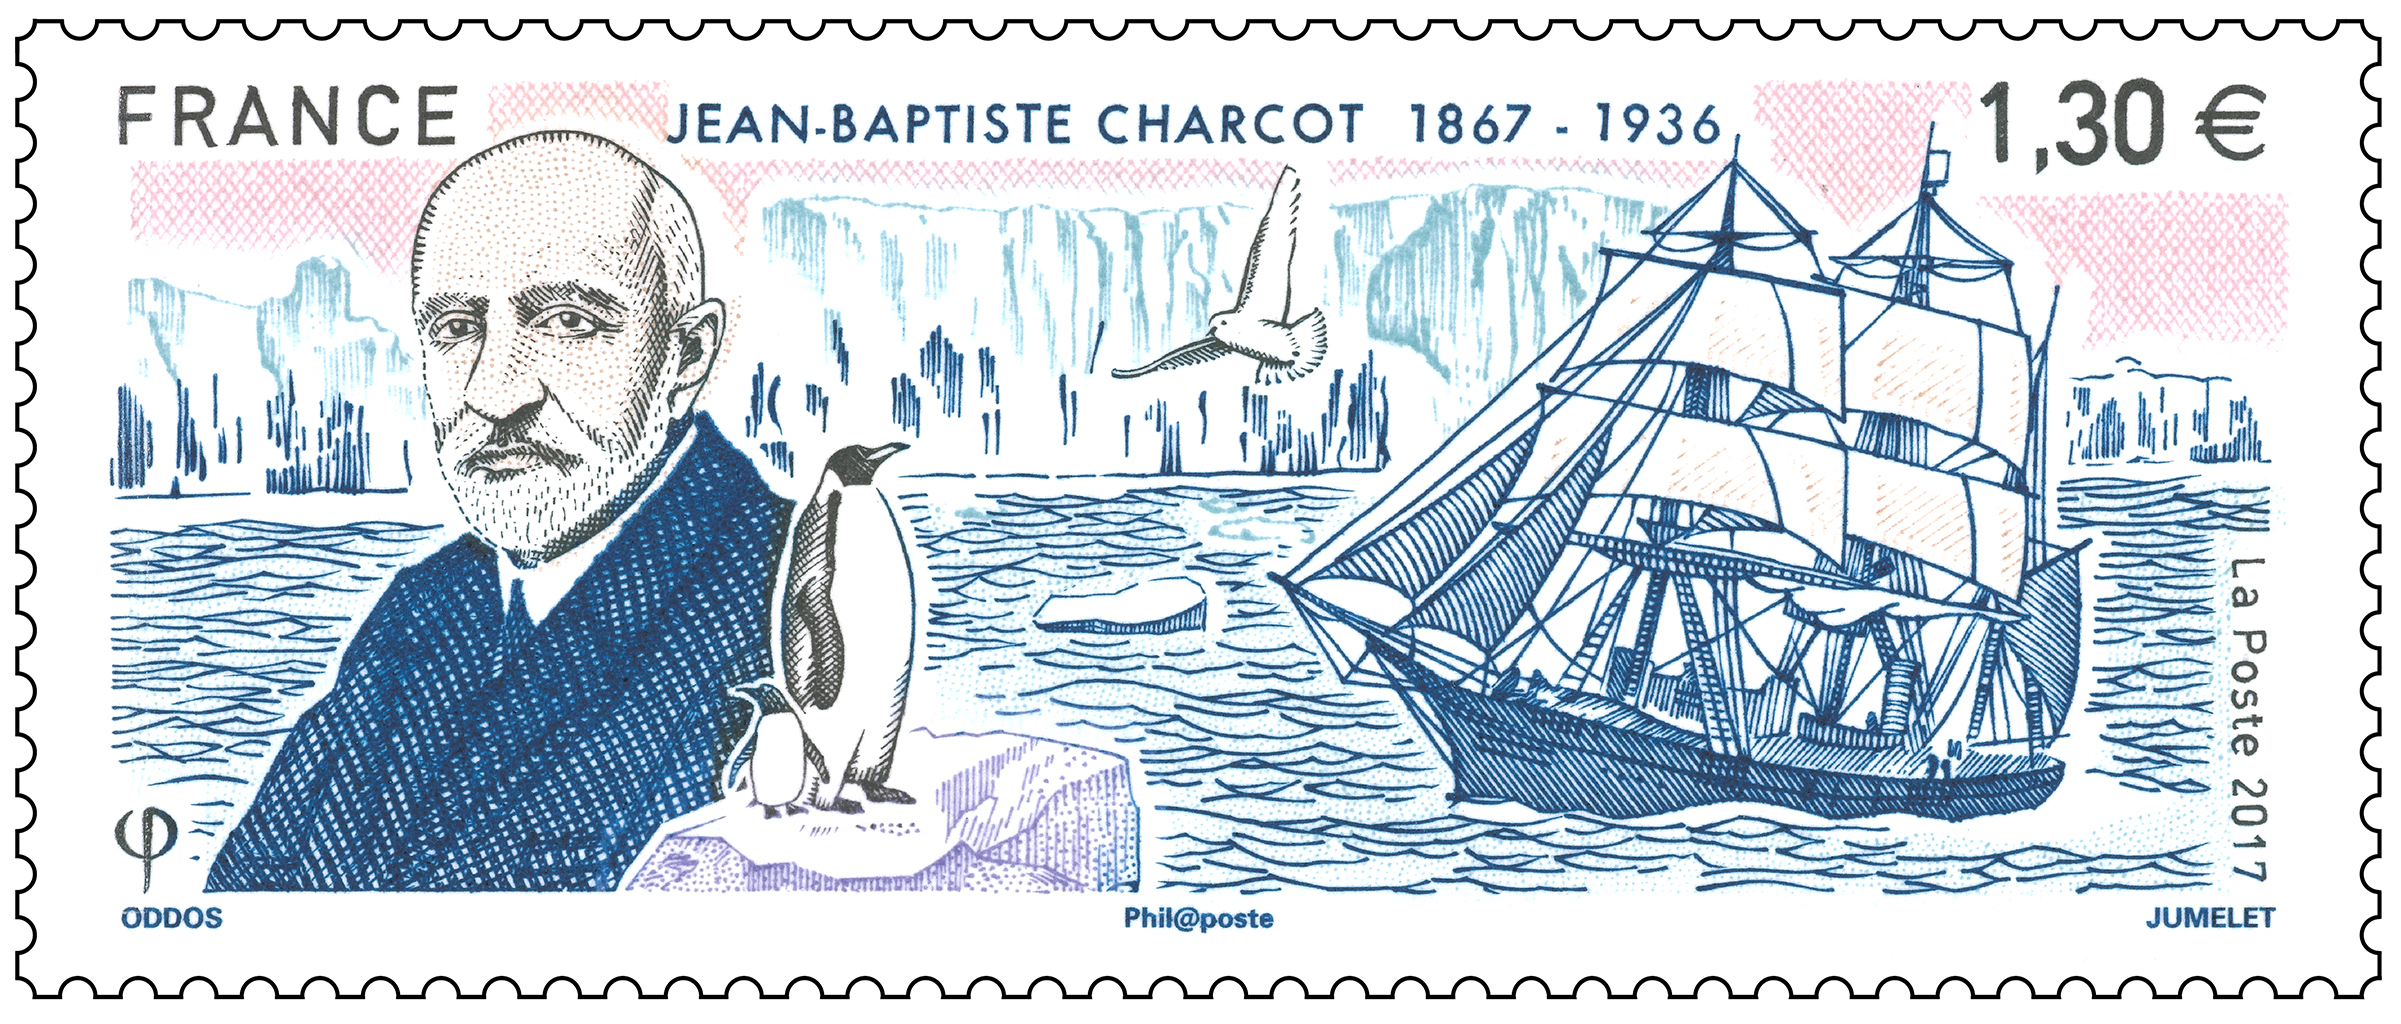 Jean-Baptiste Charcot 1867-1936